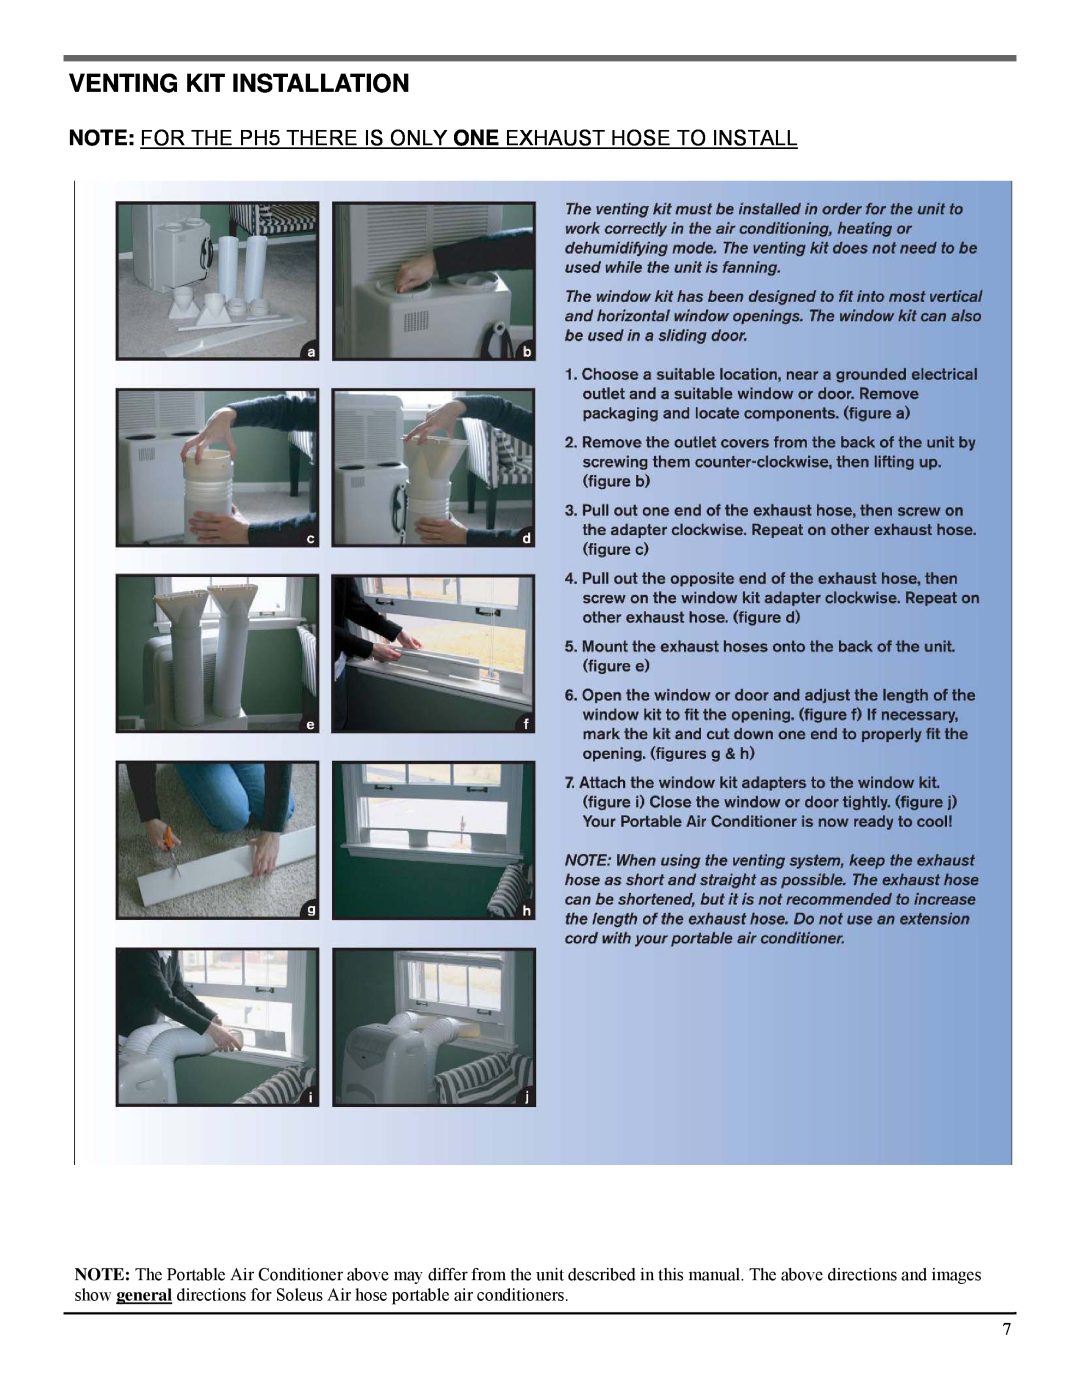 Soleus Air PH5 manual Venting Kit Installation 